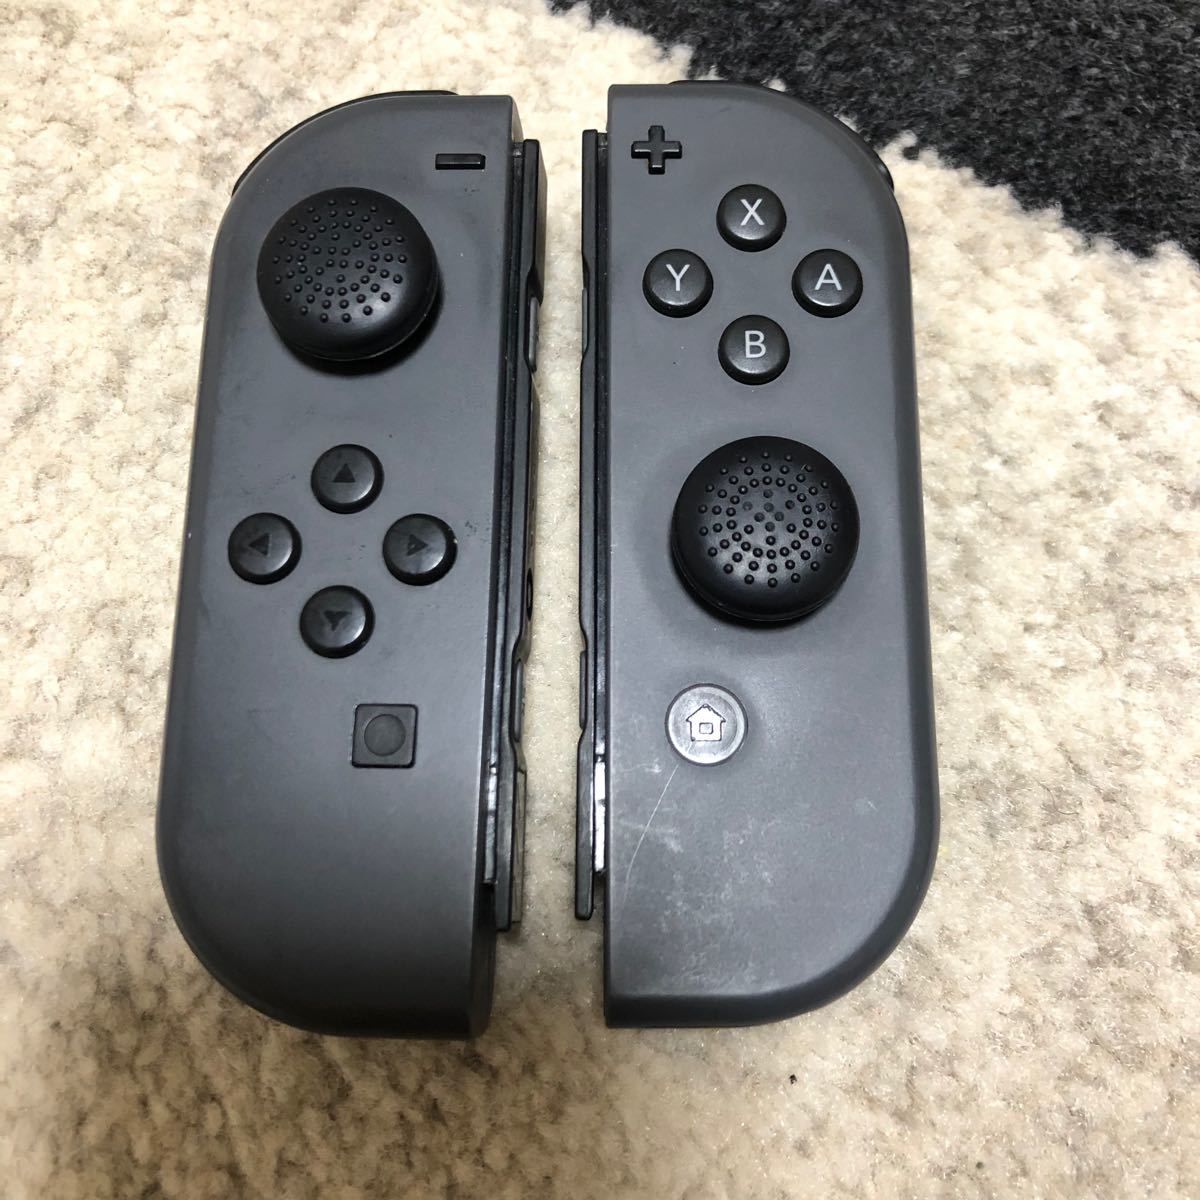 Nintendo Switch ニンテンドースイッチ本体 グレーカラー 任天堂